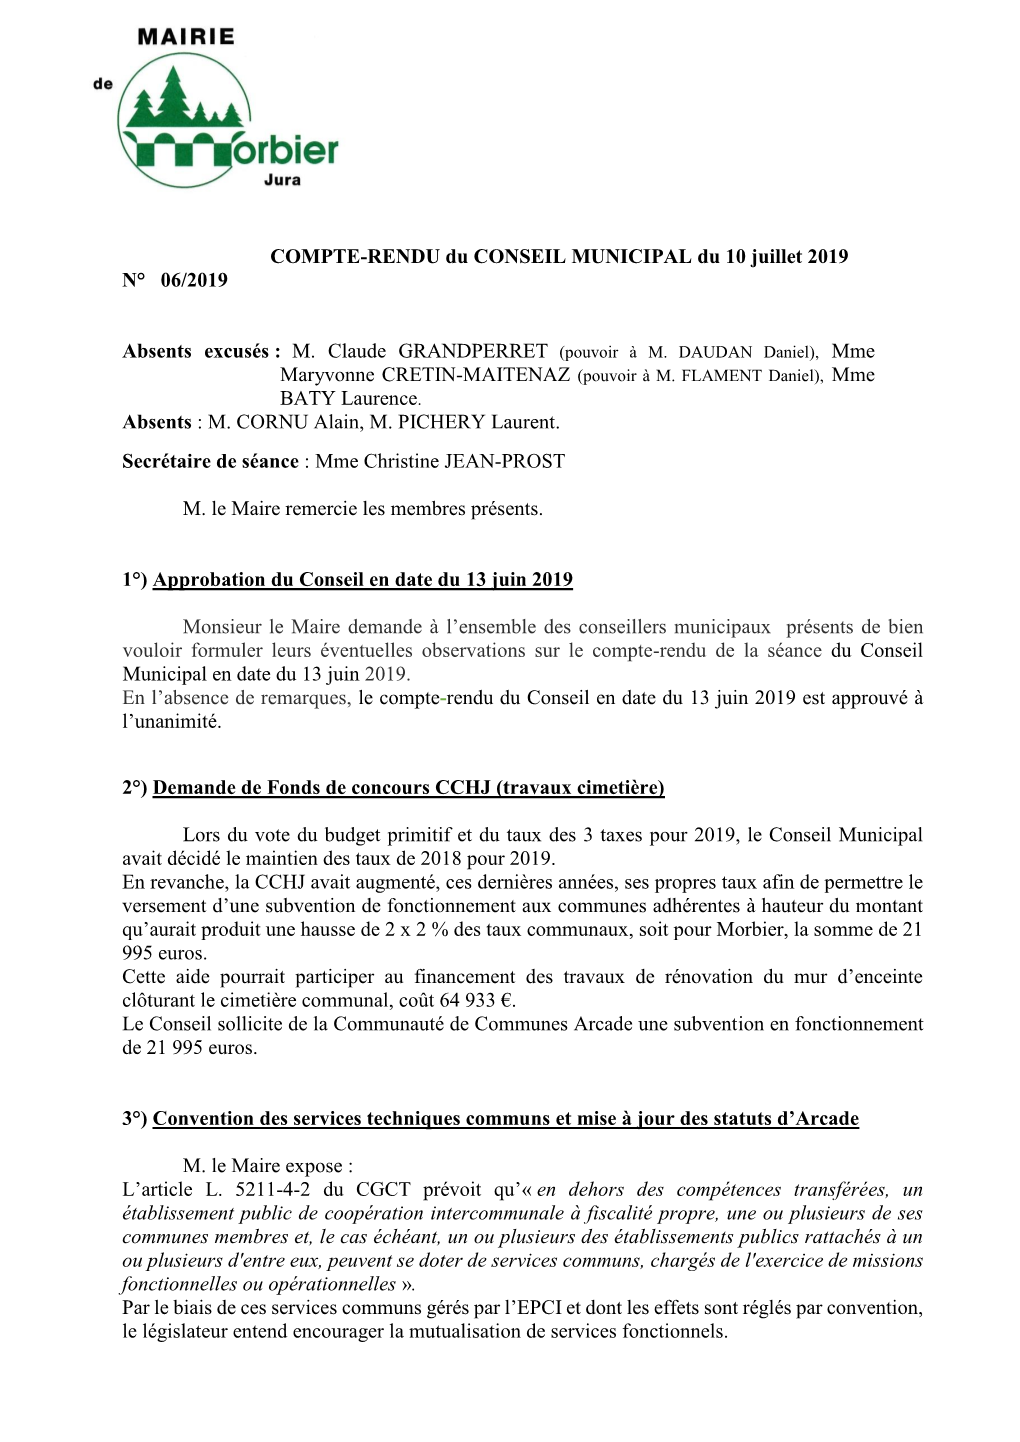 COMPTE-RENDU Du CONSEIL MUNICIPAL Du 10 Juillet 2019 N° 06/2019